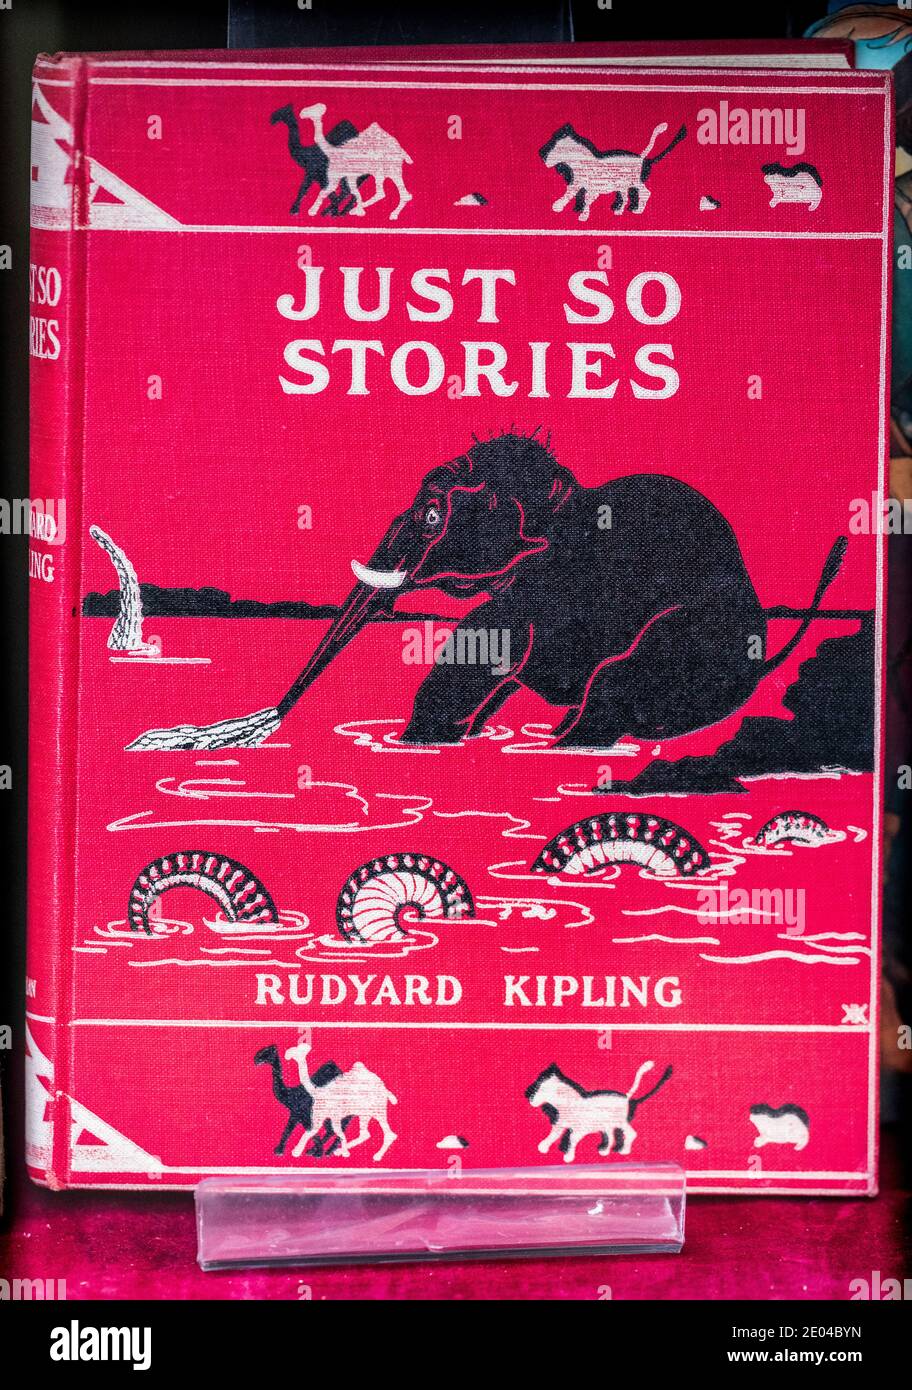 Rudyard Kipling Book Fotos e Imágenes de stock - Alamy